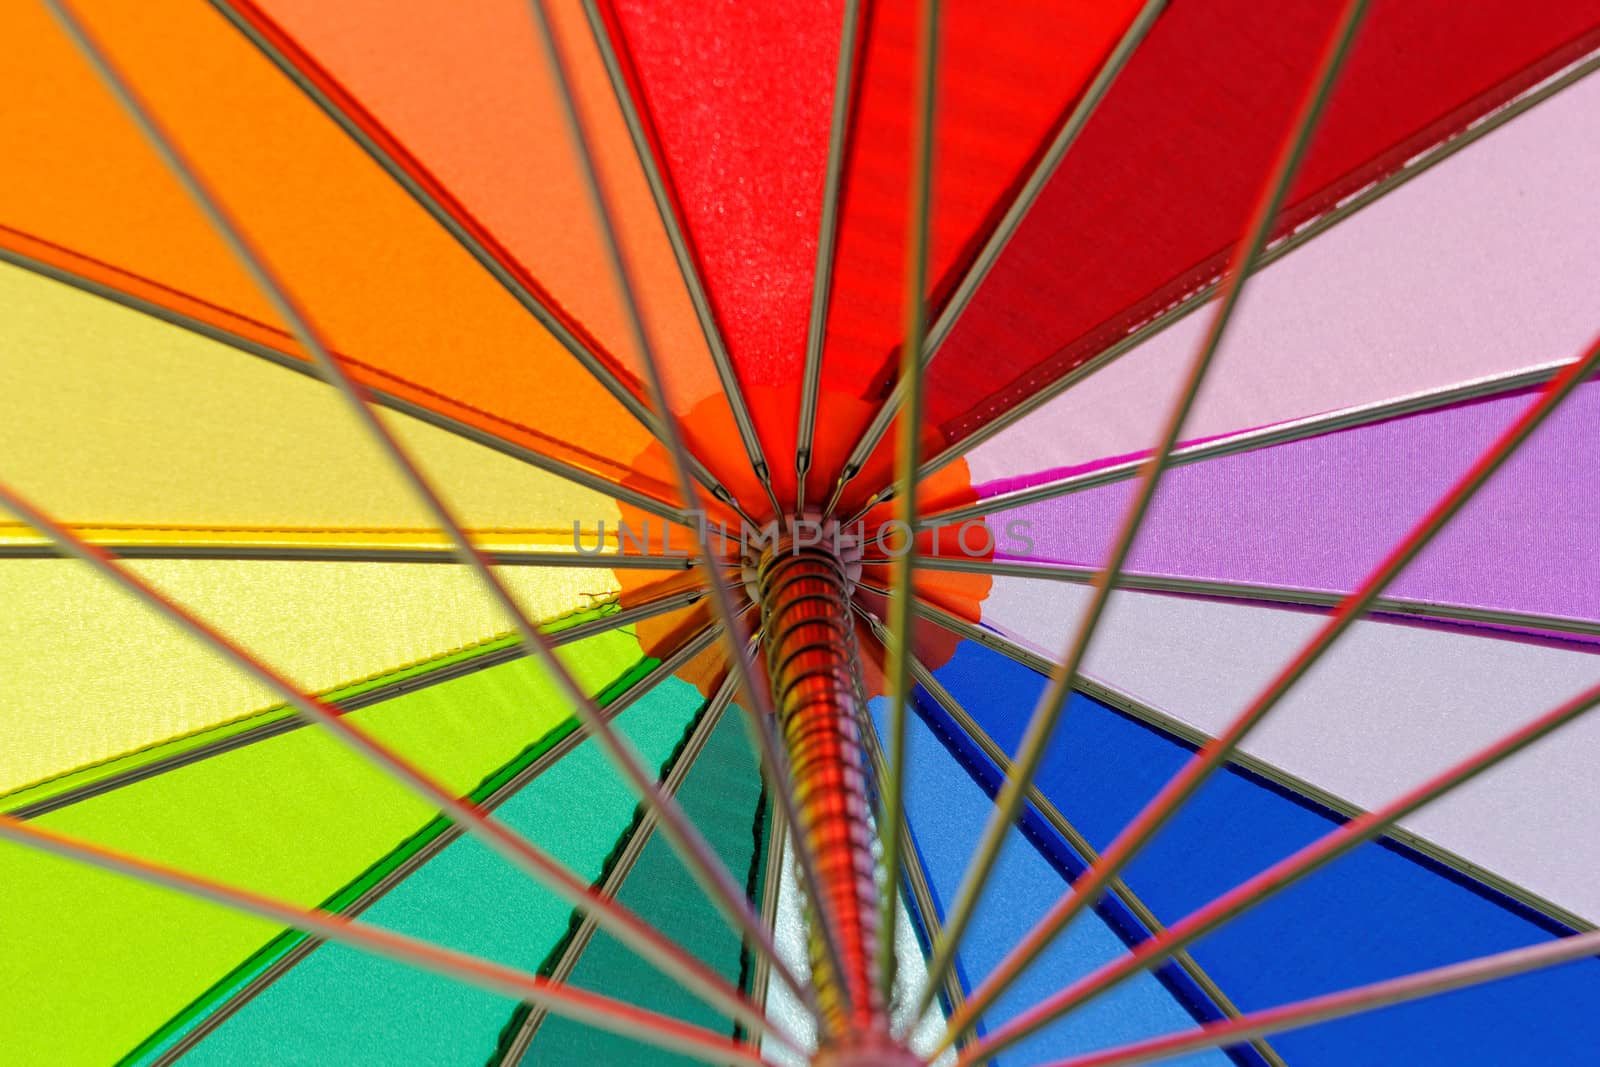 rainbow colored umbrella close-up